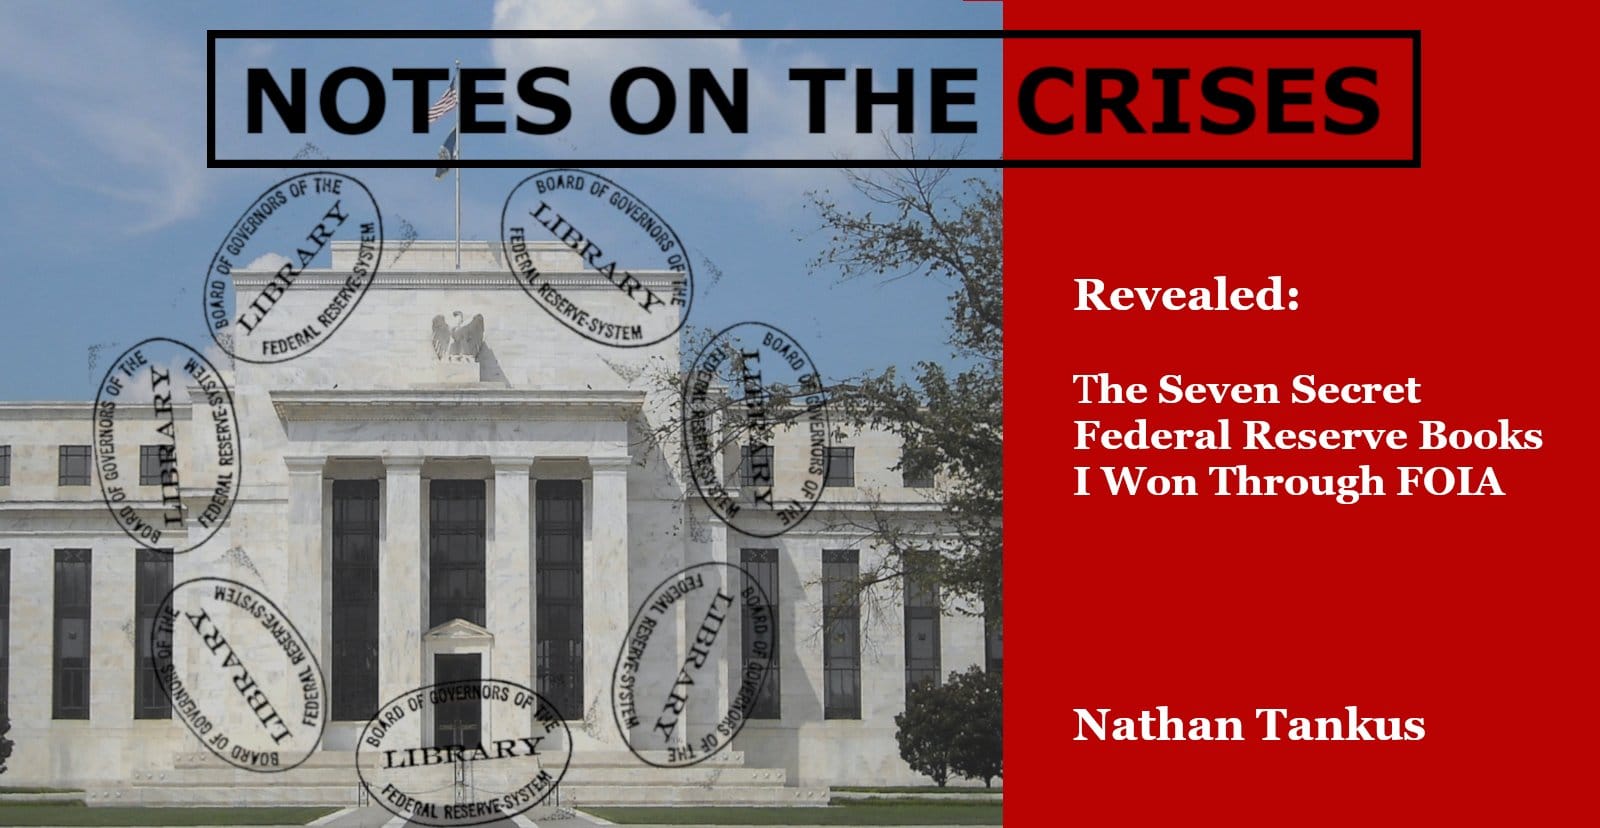 Revealed: The Seven Secret Federal Reserve Books I Won Through FOIA